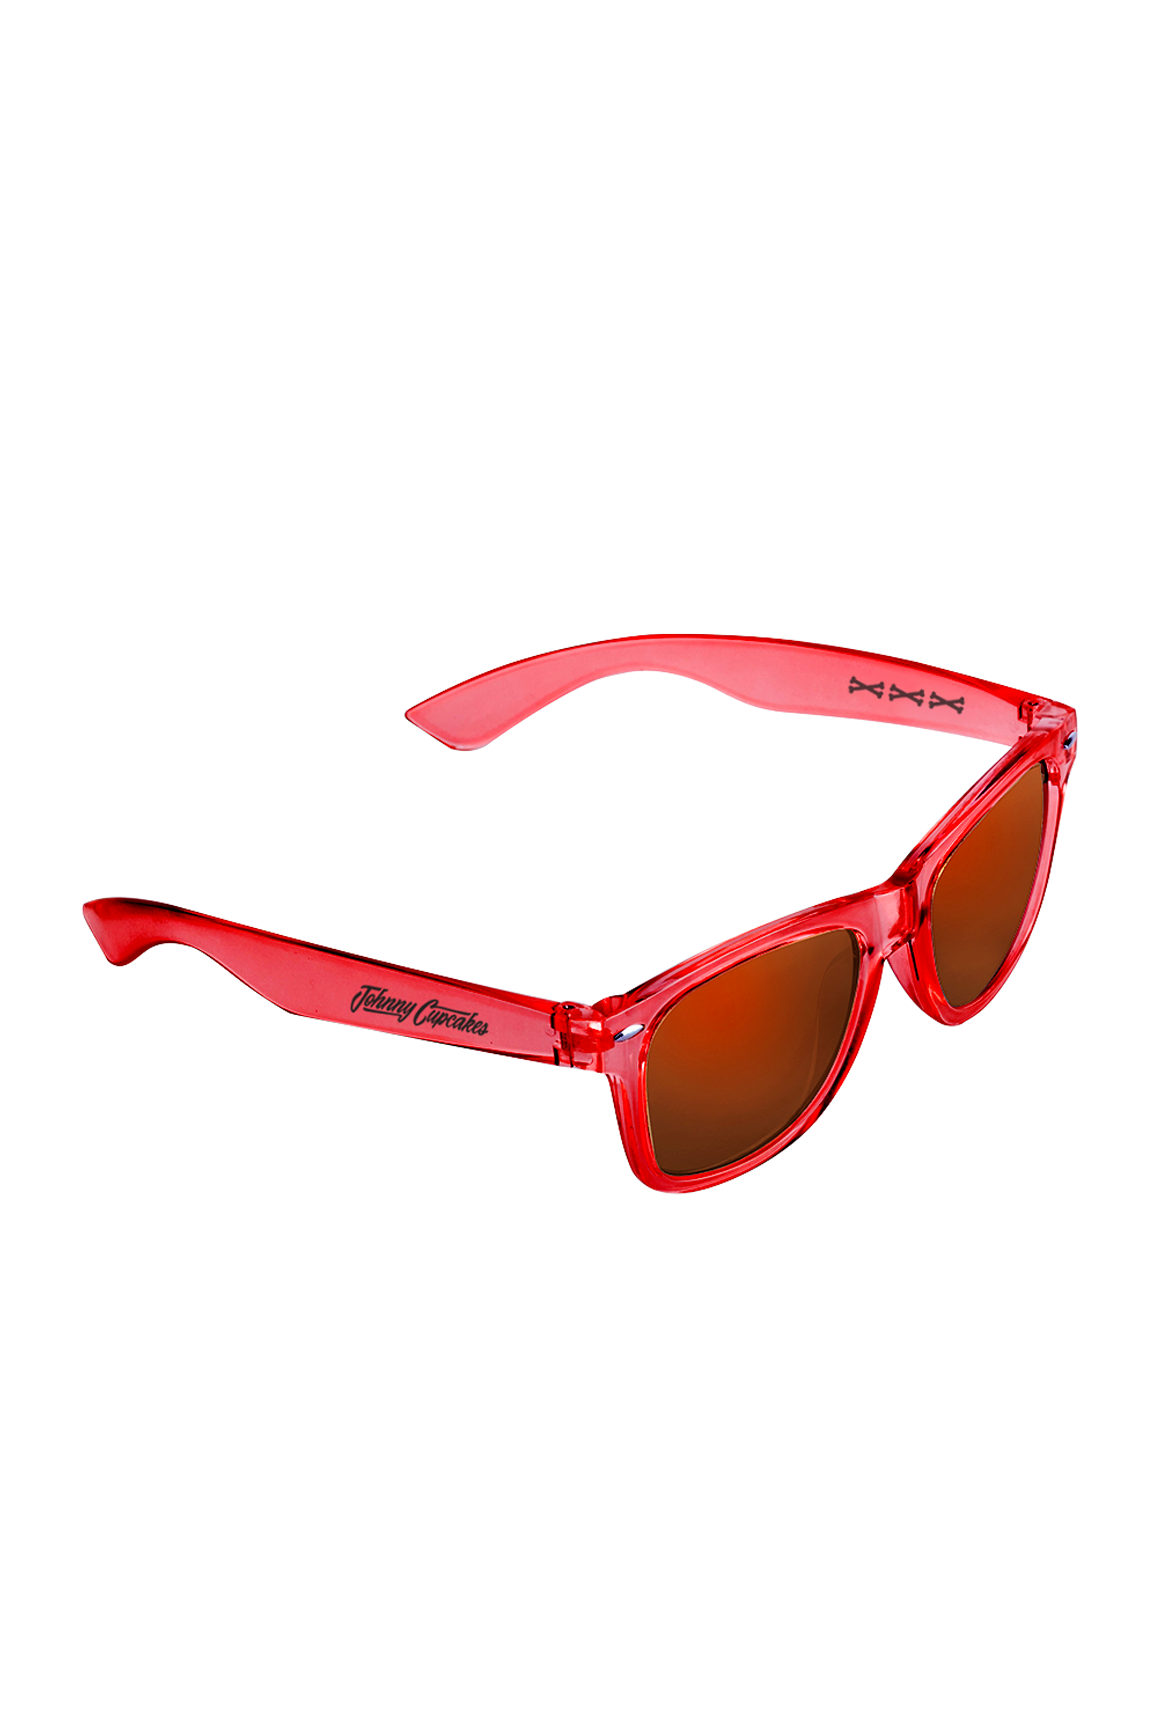 JC Script Mirrored Sunglasses - Red